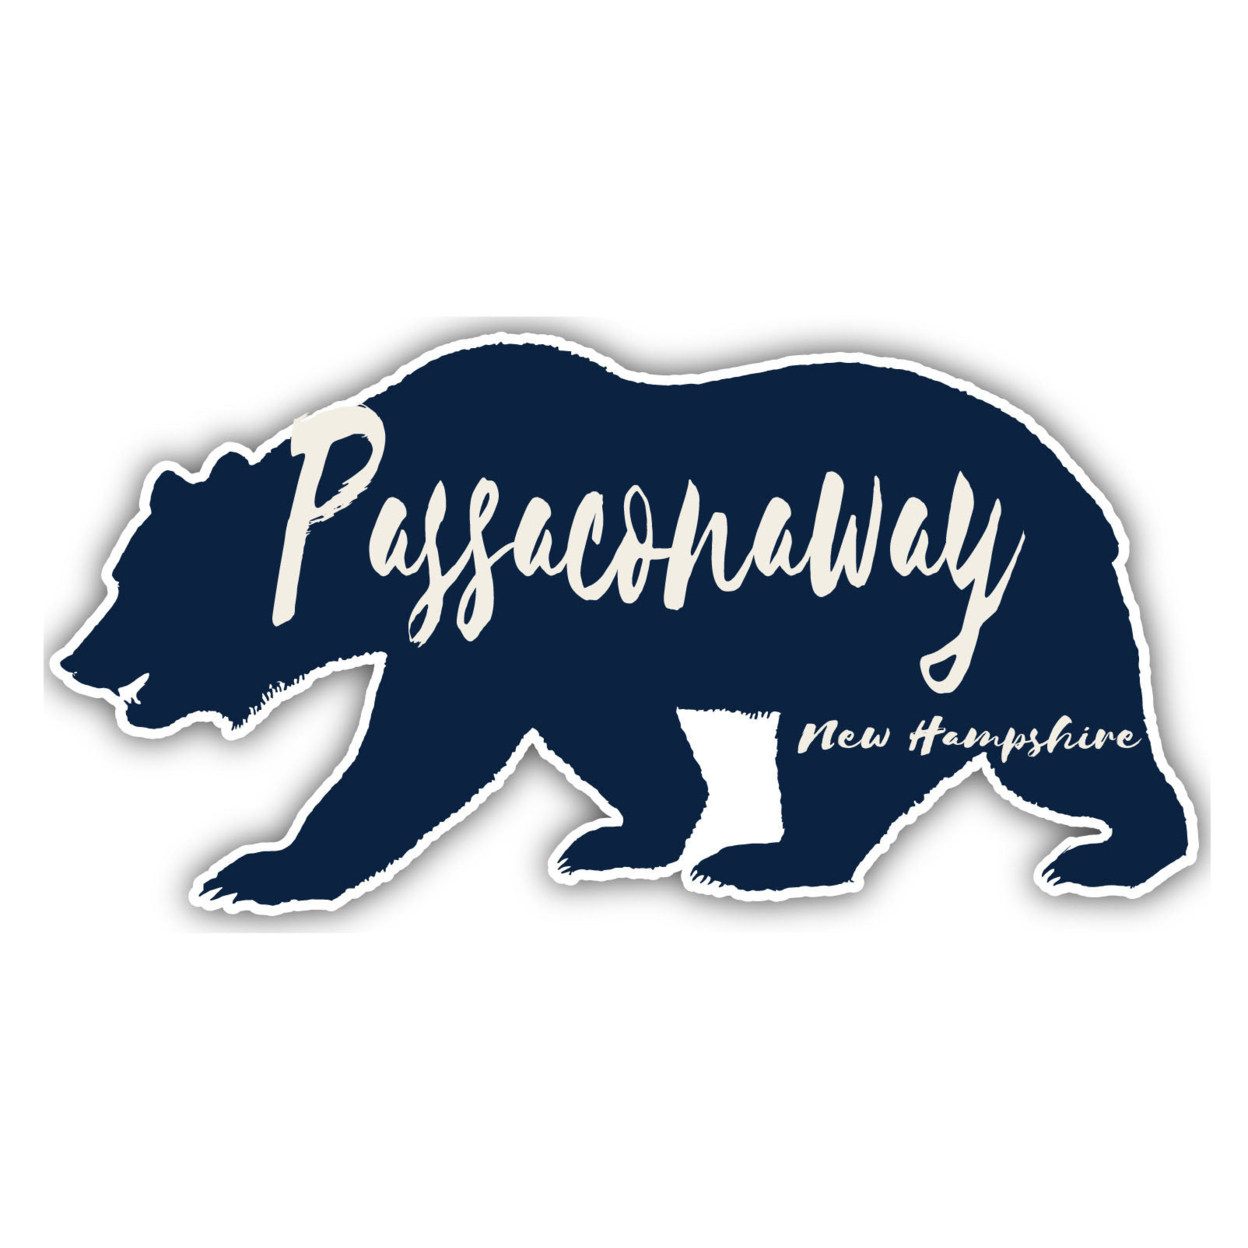 Passaconaway New Hampshire Souvenir Decorative Stickers (Choose Theme And Size) - Single Unit, 2-Inch, Bear